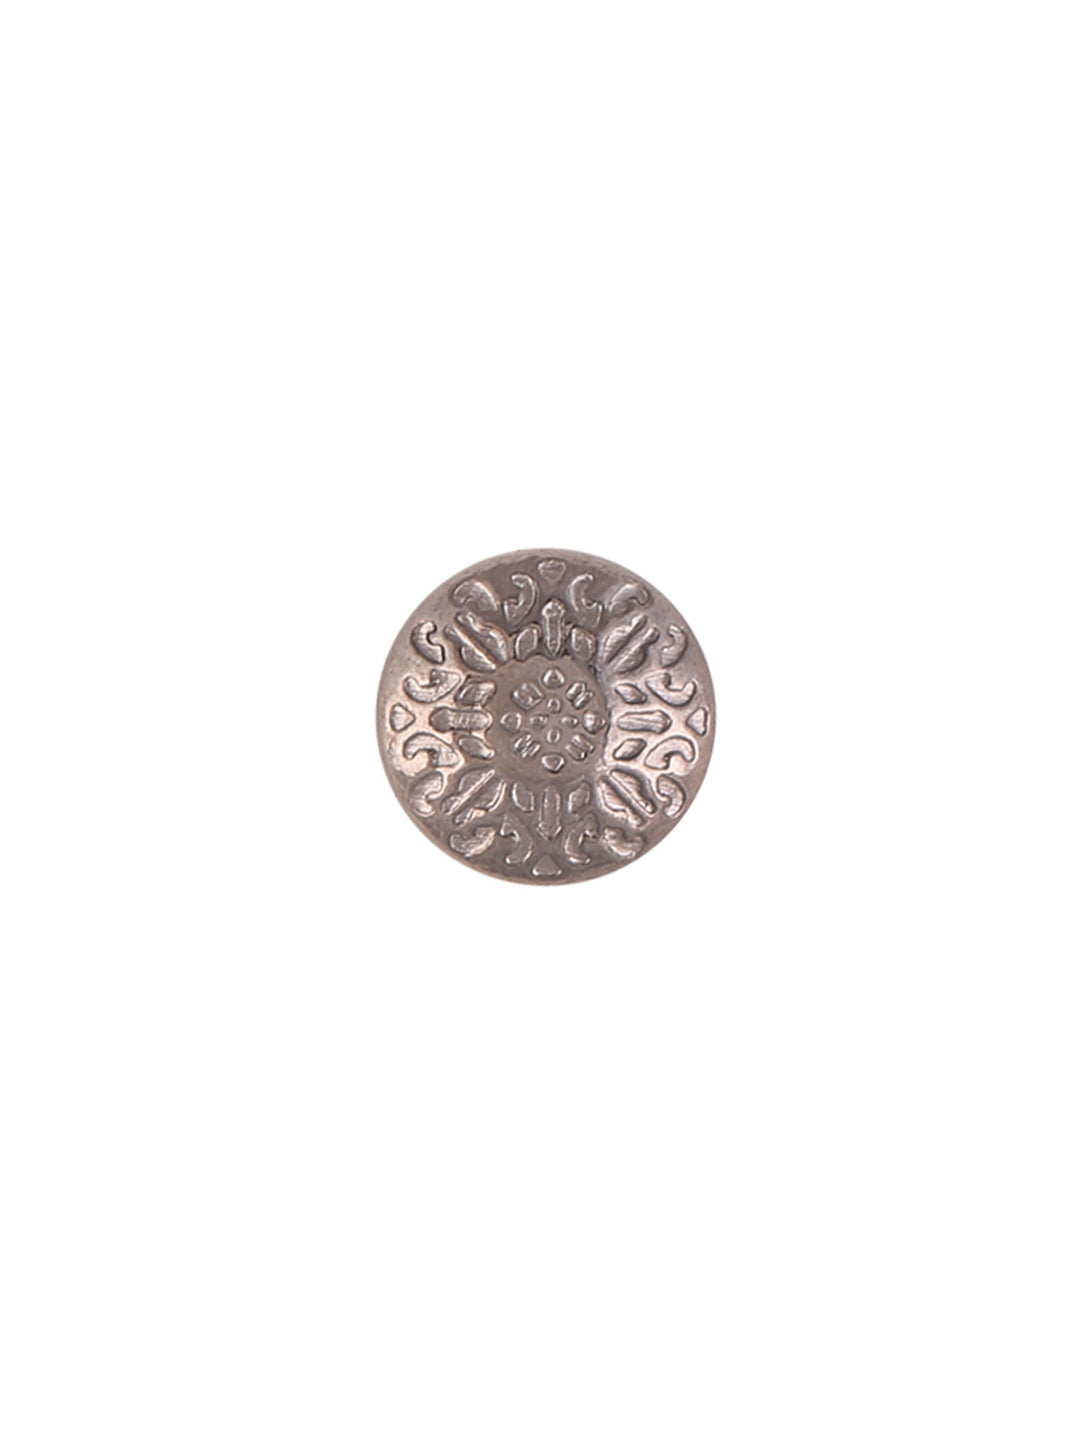 Engraved Design Round Shape Shank Metal Button in Black Nickel (Gunmetal) Color